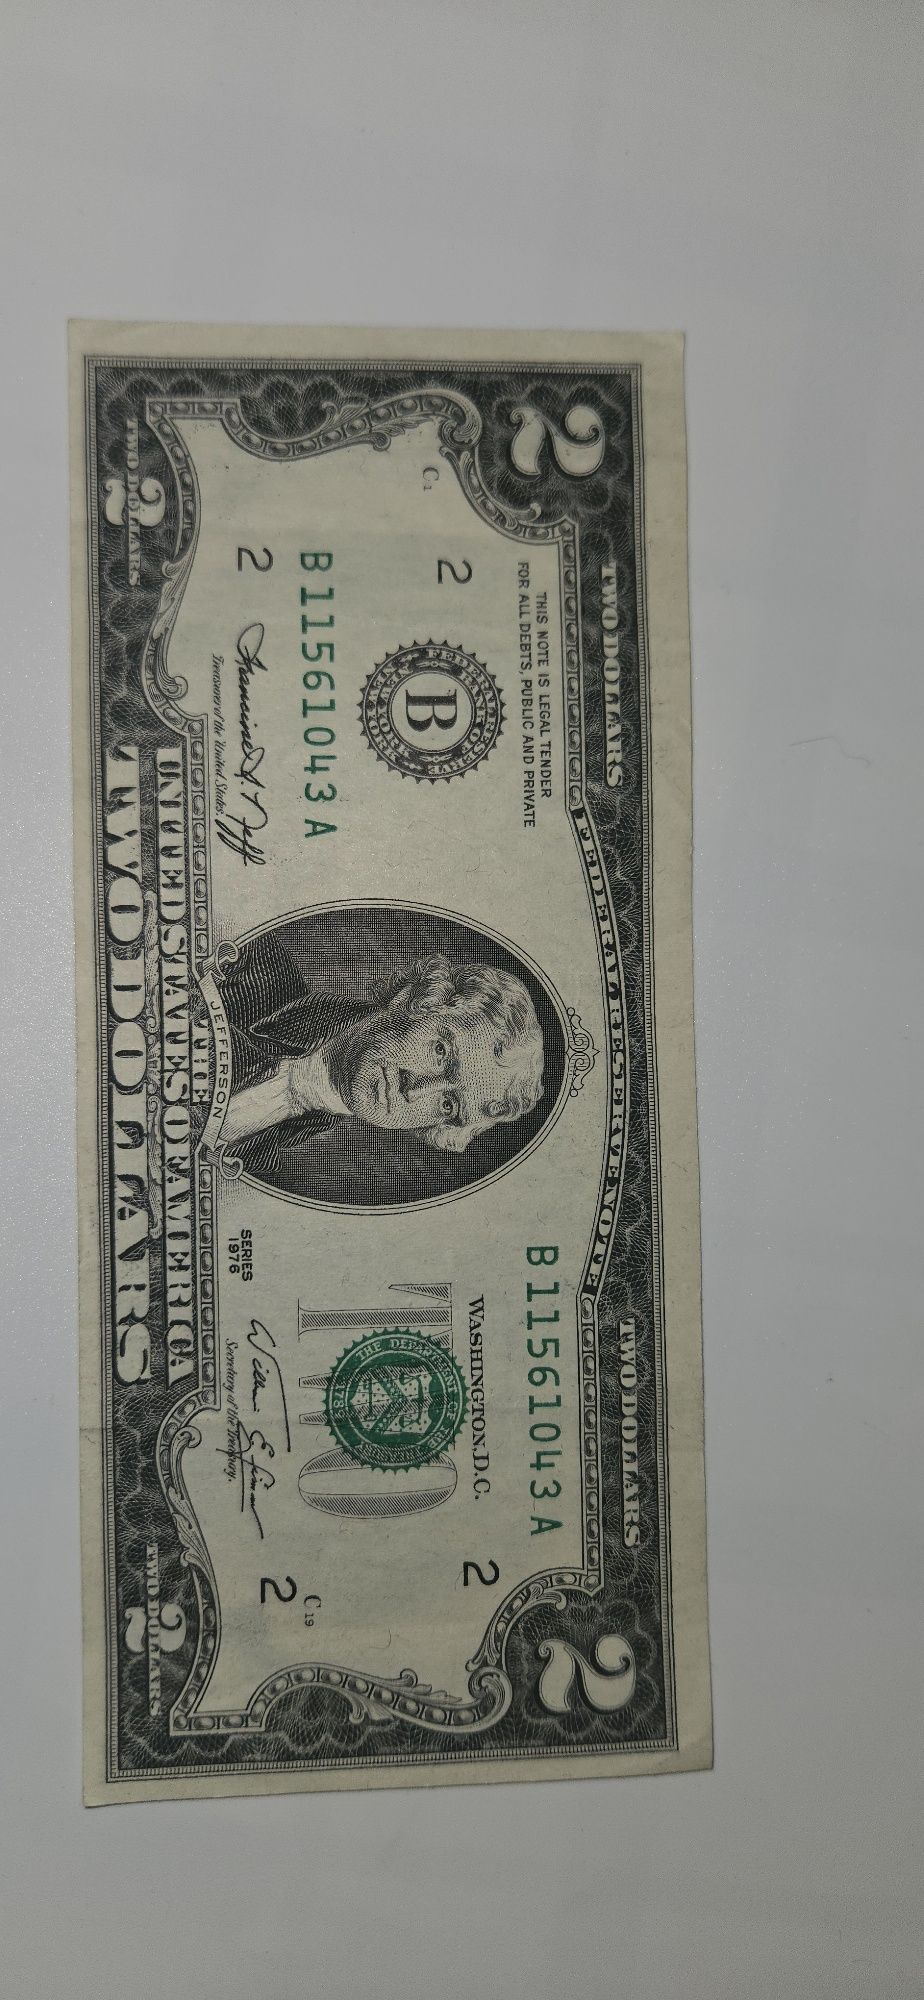 Vand bagnota de doi dolari 1976